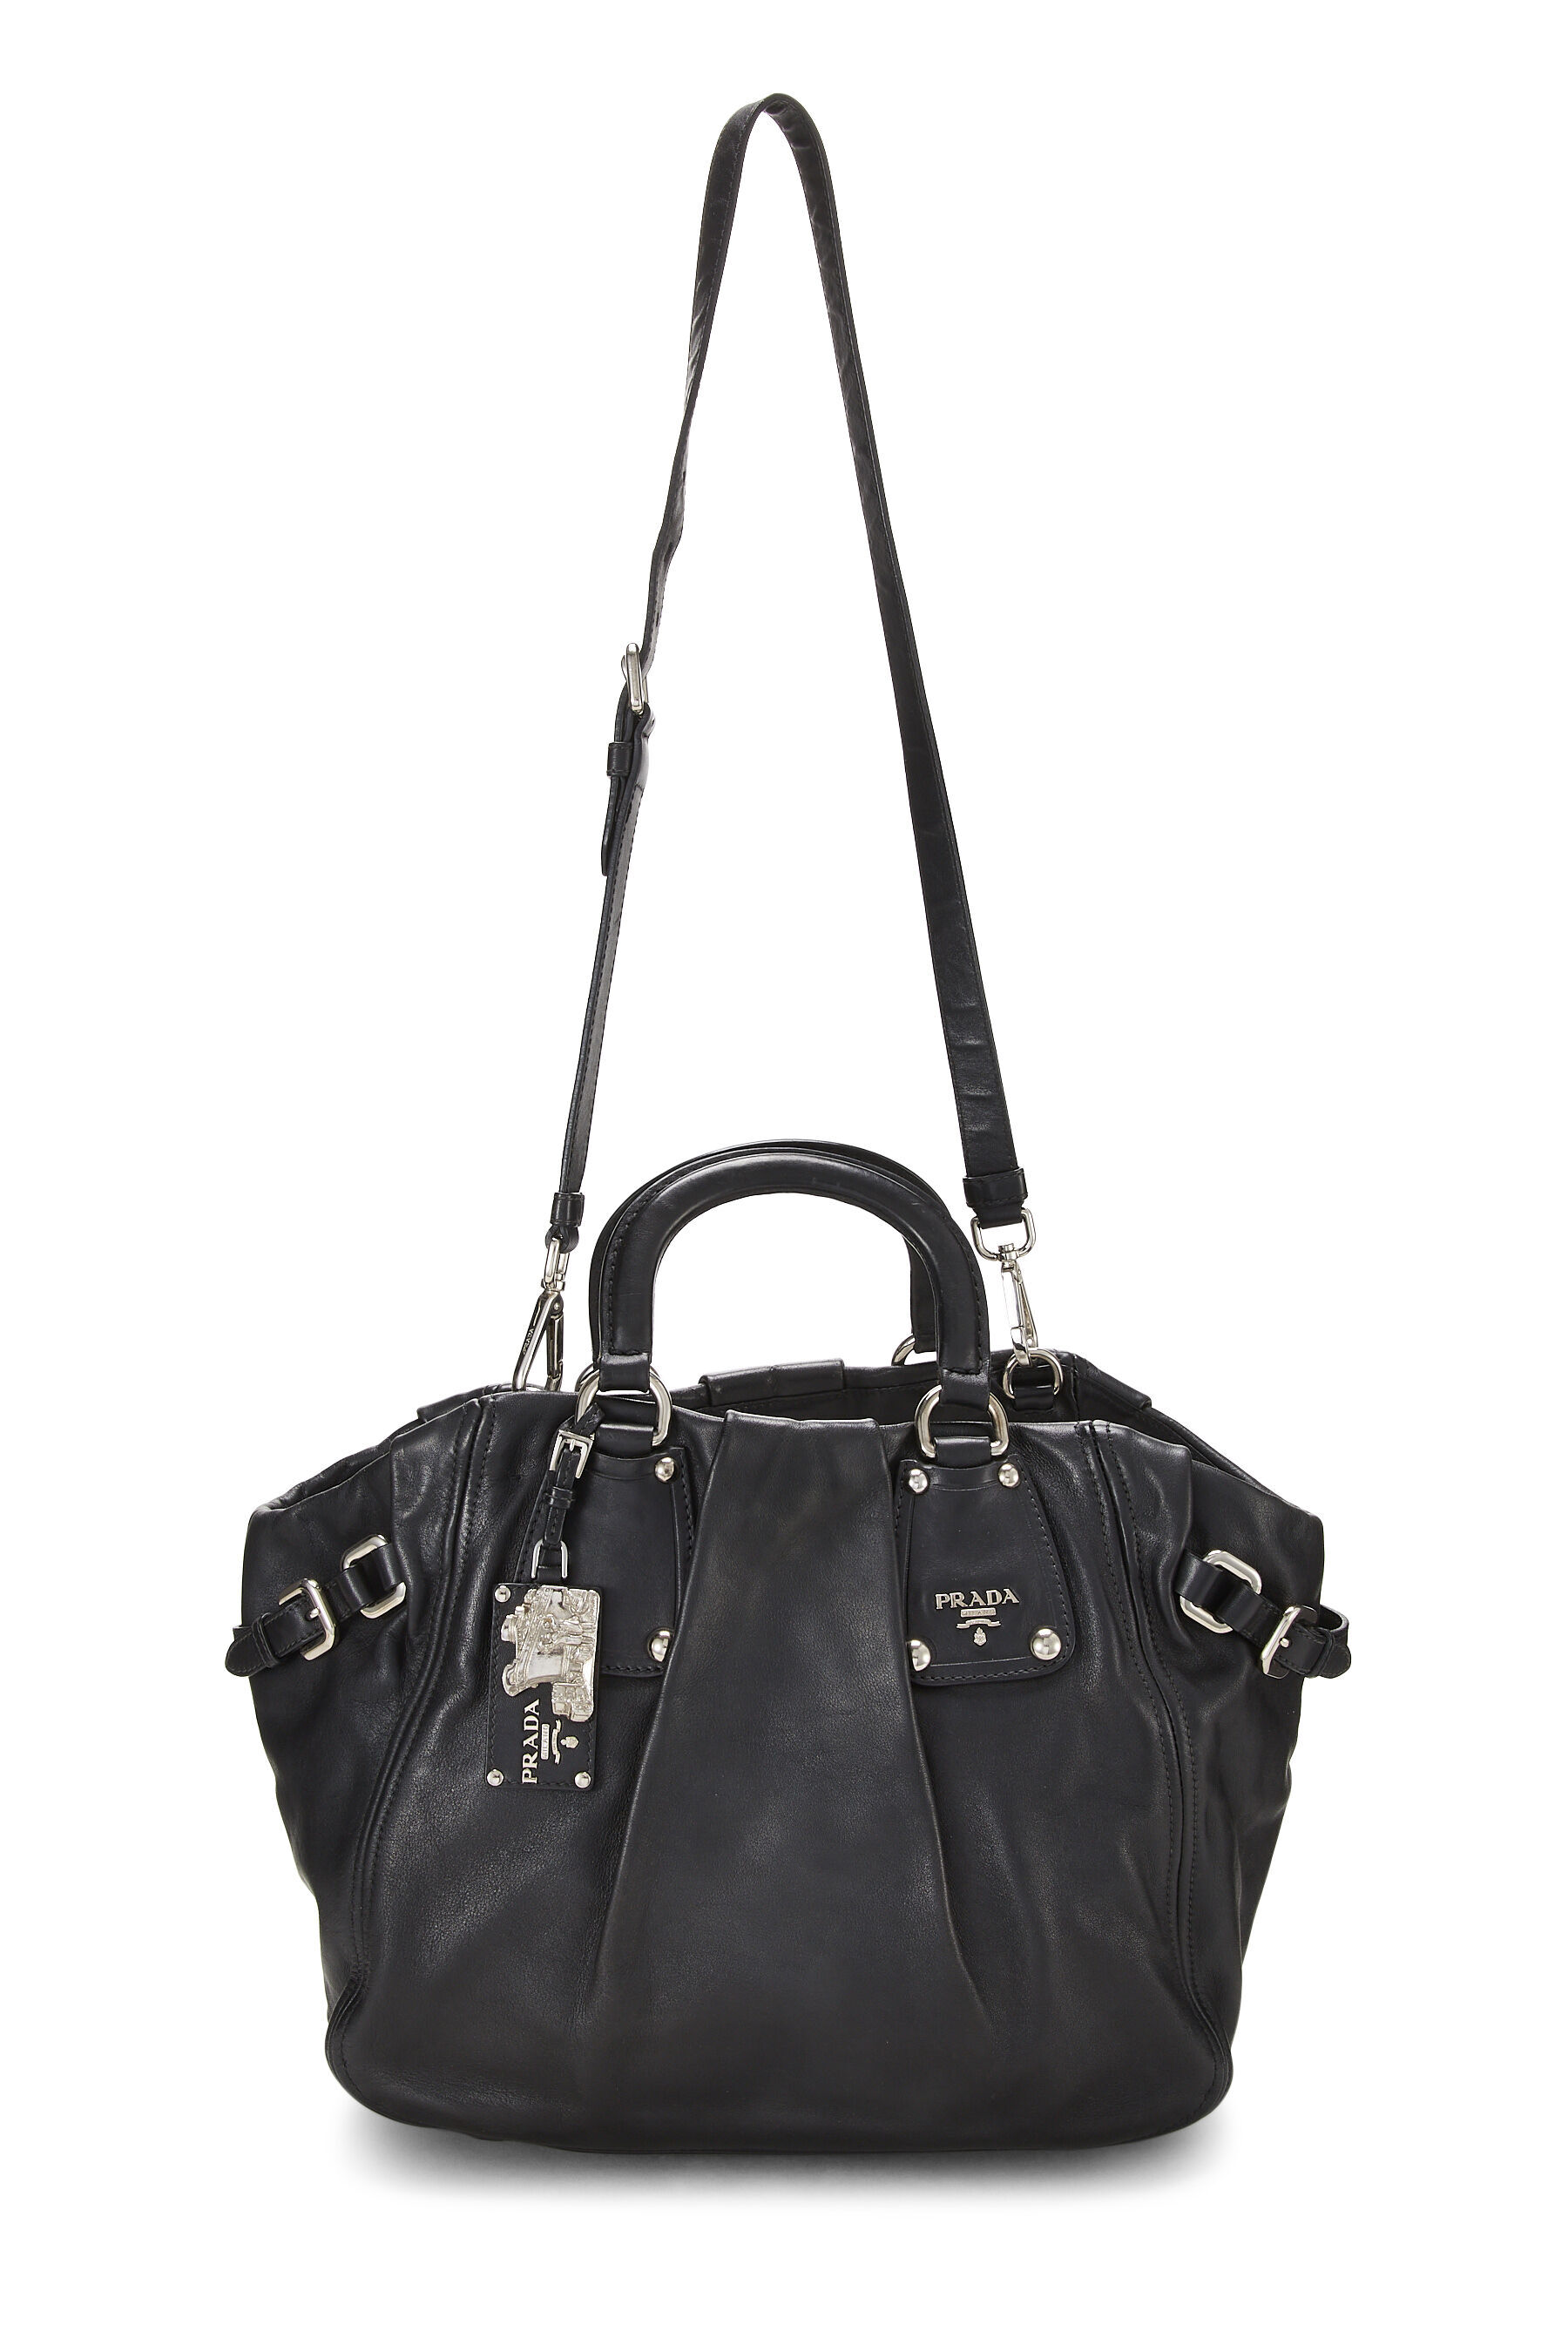 Prada Saffiano Leather Handbag, Black | Costco